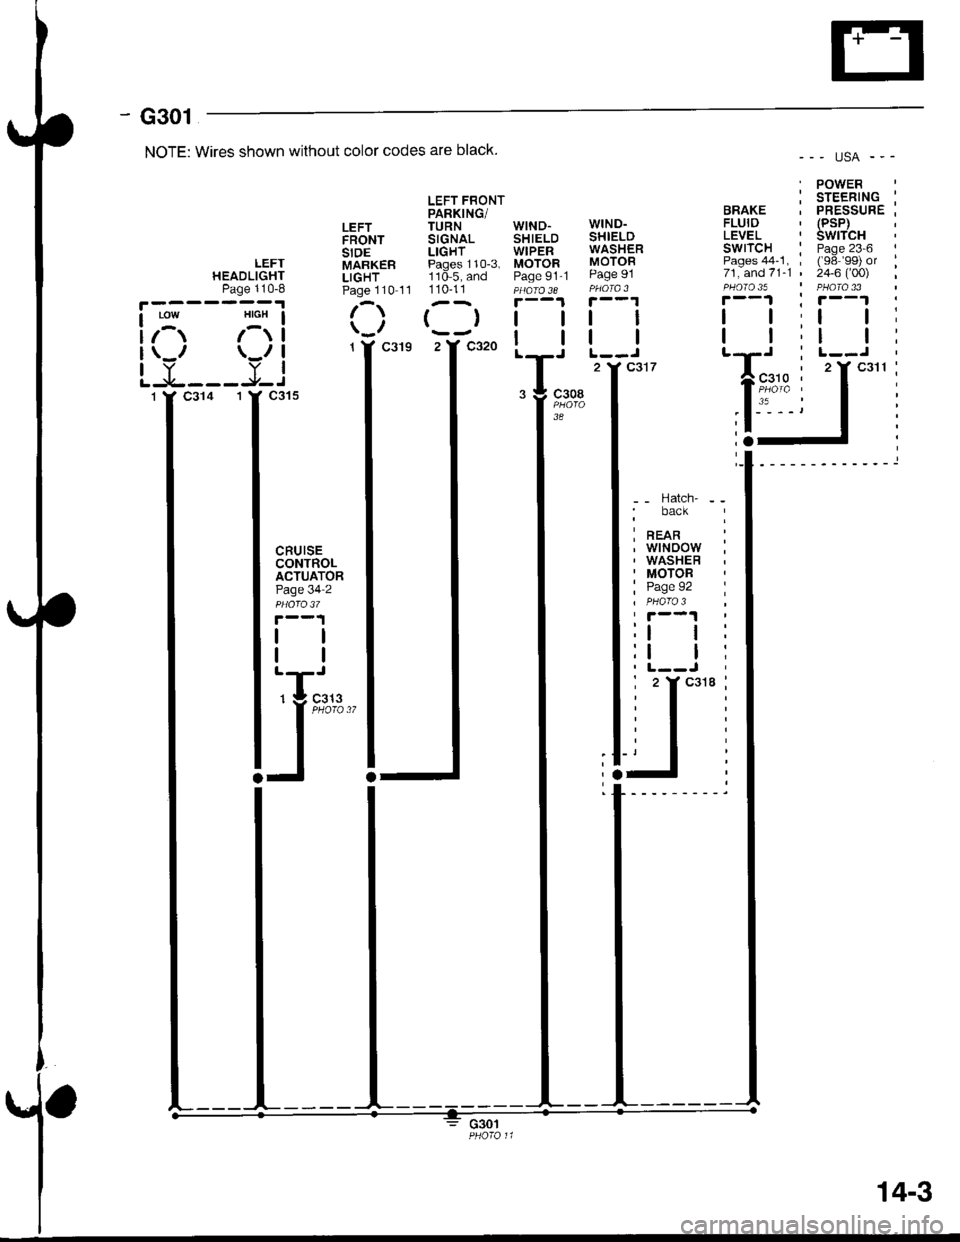 HONDA INTEGRA 1998 4.G User Guide - G301
NOTE: Wires shown without color codes are black.
LEFT FBONTPARKING/LEFT TURN WIND.FRONT SIGNAL SHIELDSIDE LIGHT WIPER
()l
2Y c320 |
--- usA ---
. POWERi sreentlc :BRAKE . PRESSURE ;FLUID  (PsP